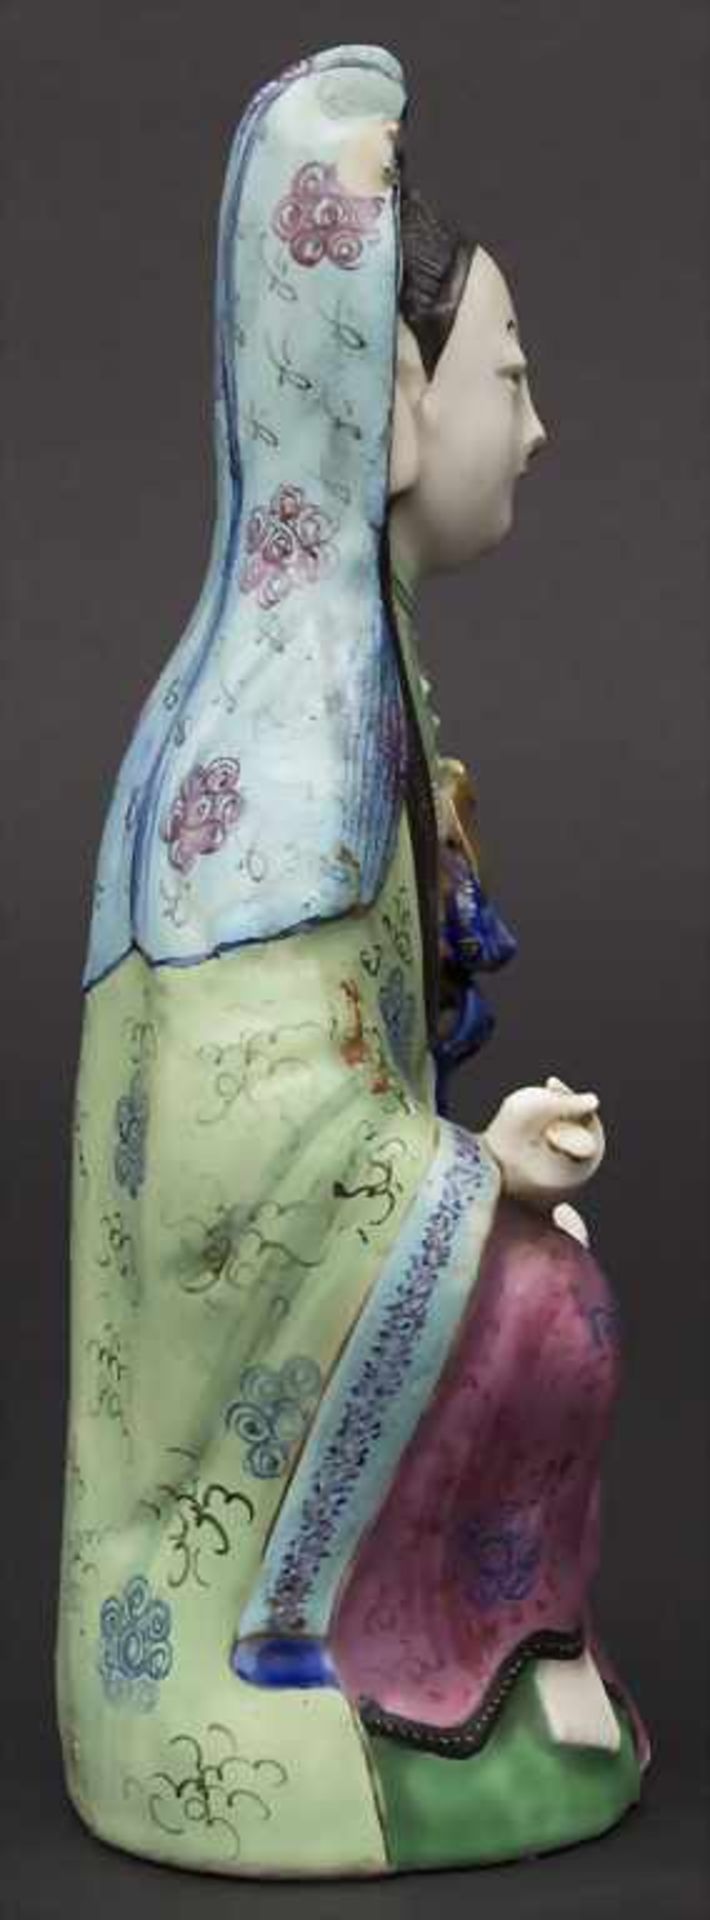 Guanjin bzw. Räuchergefäß, China, Qing-Dyastie, 18.Jh.Material: Porzellan, polychrom bemalt, - Image 2 of 6